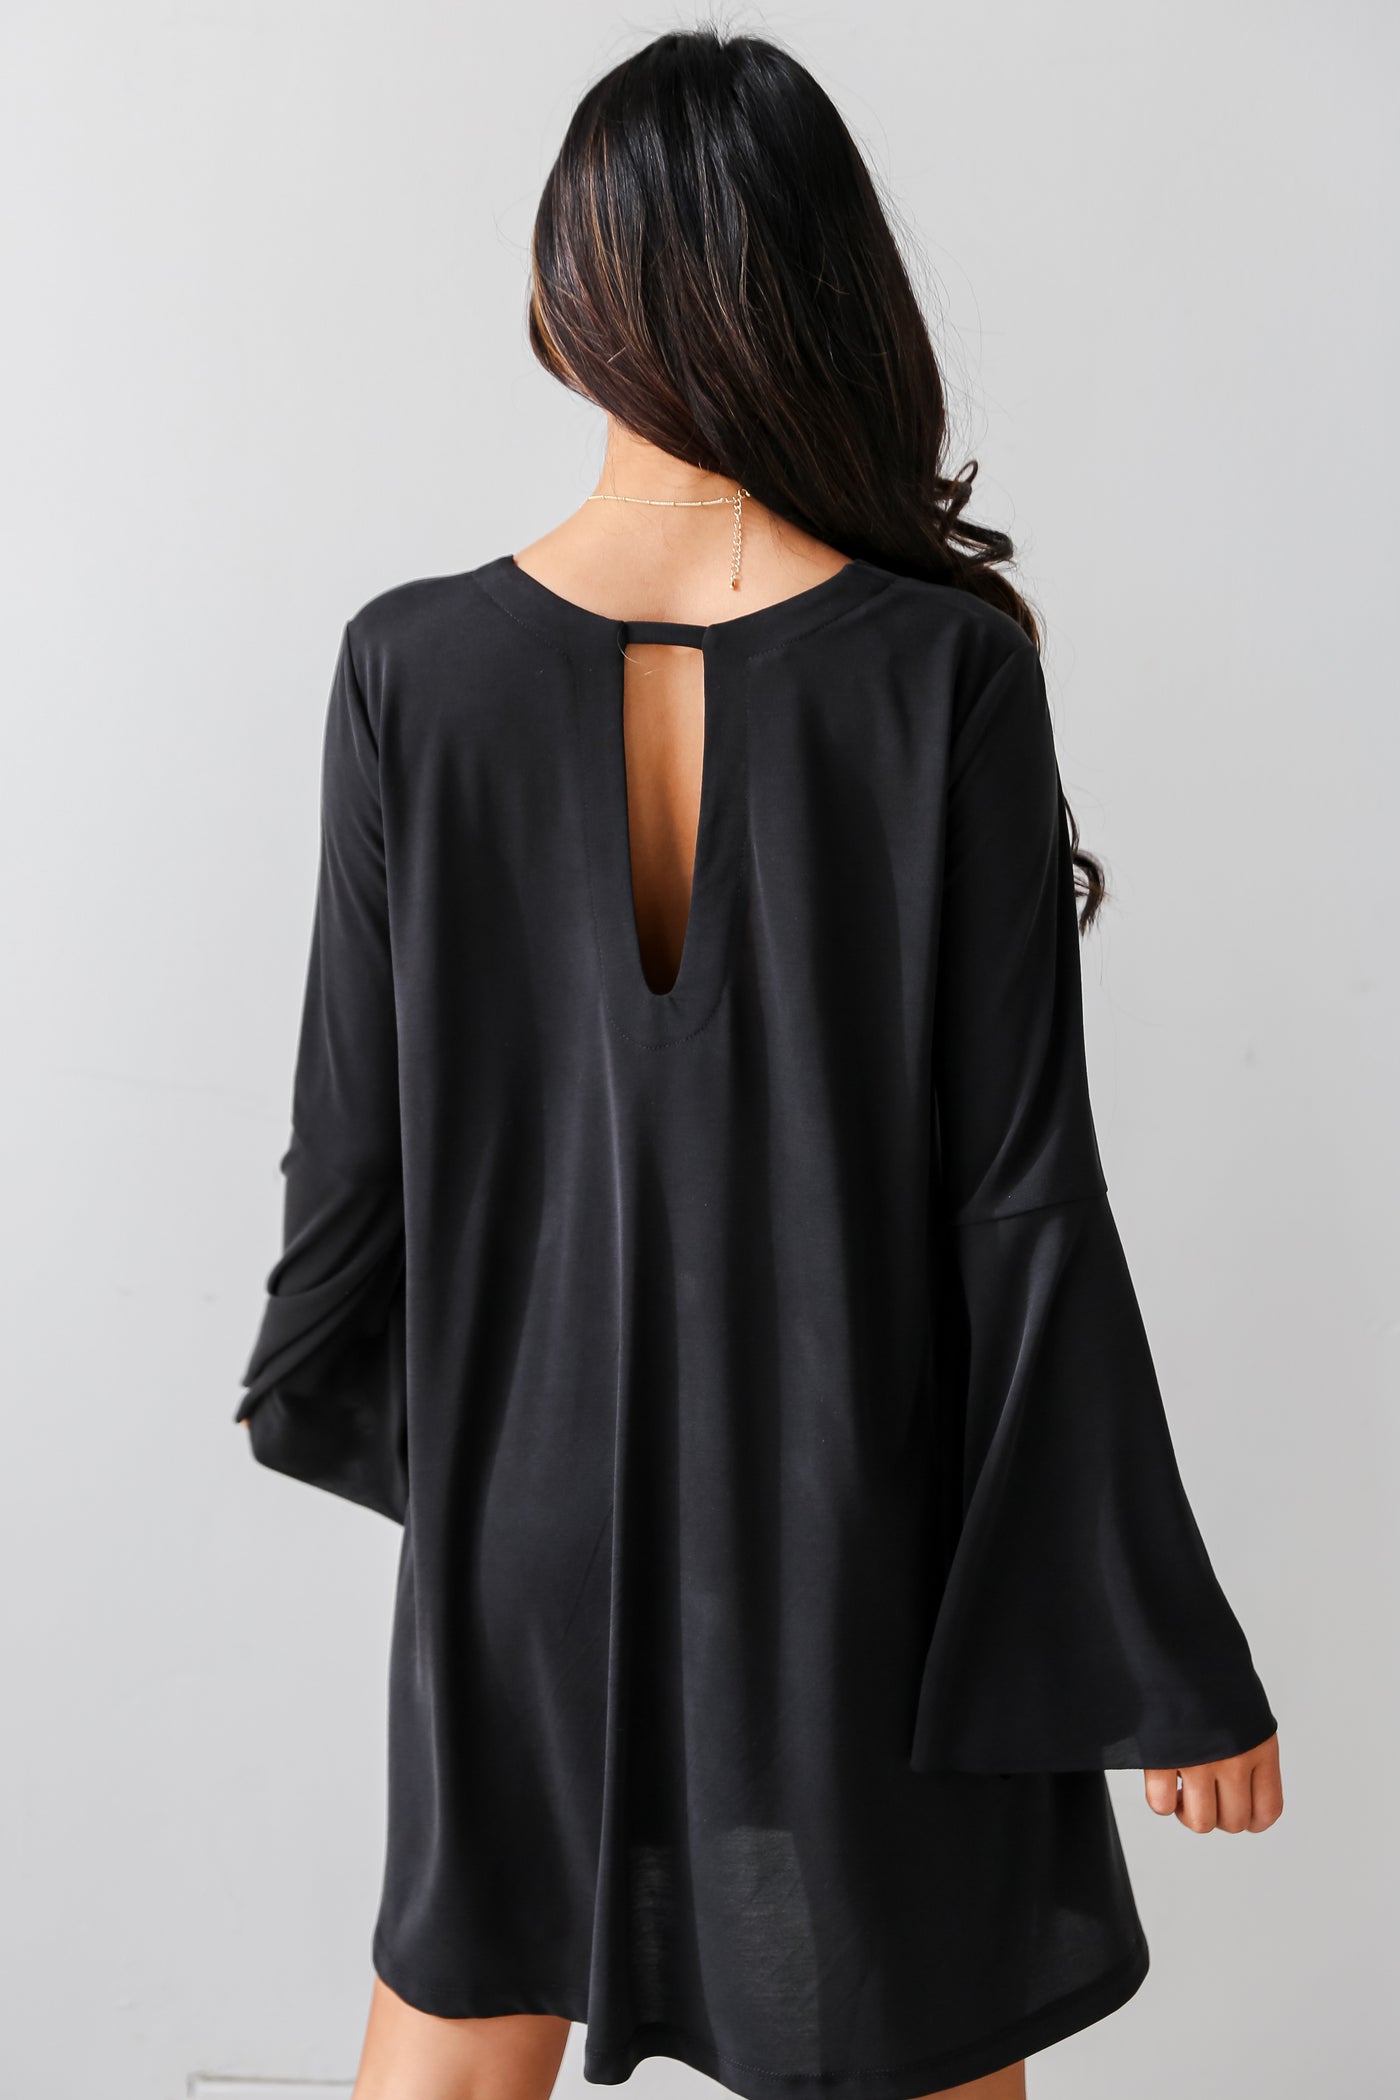 womens Black Bell Sleeve Mini Dress.  Cheap Dresses. Online cheap dresses